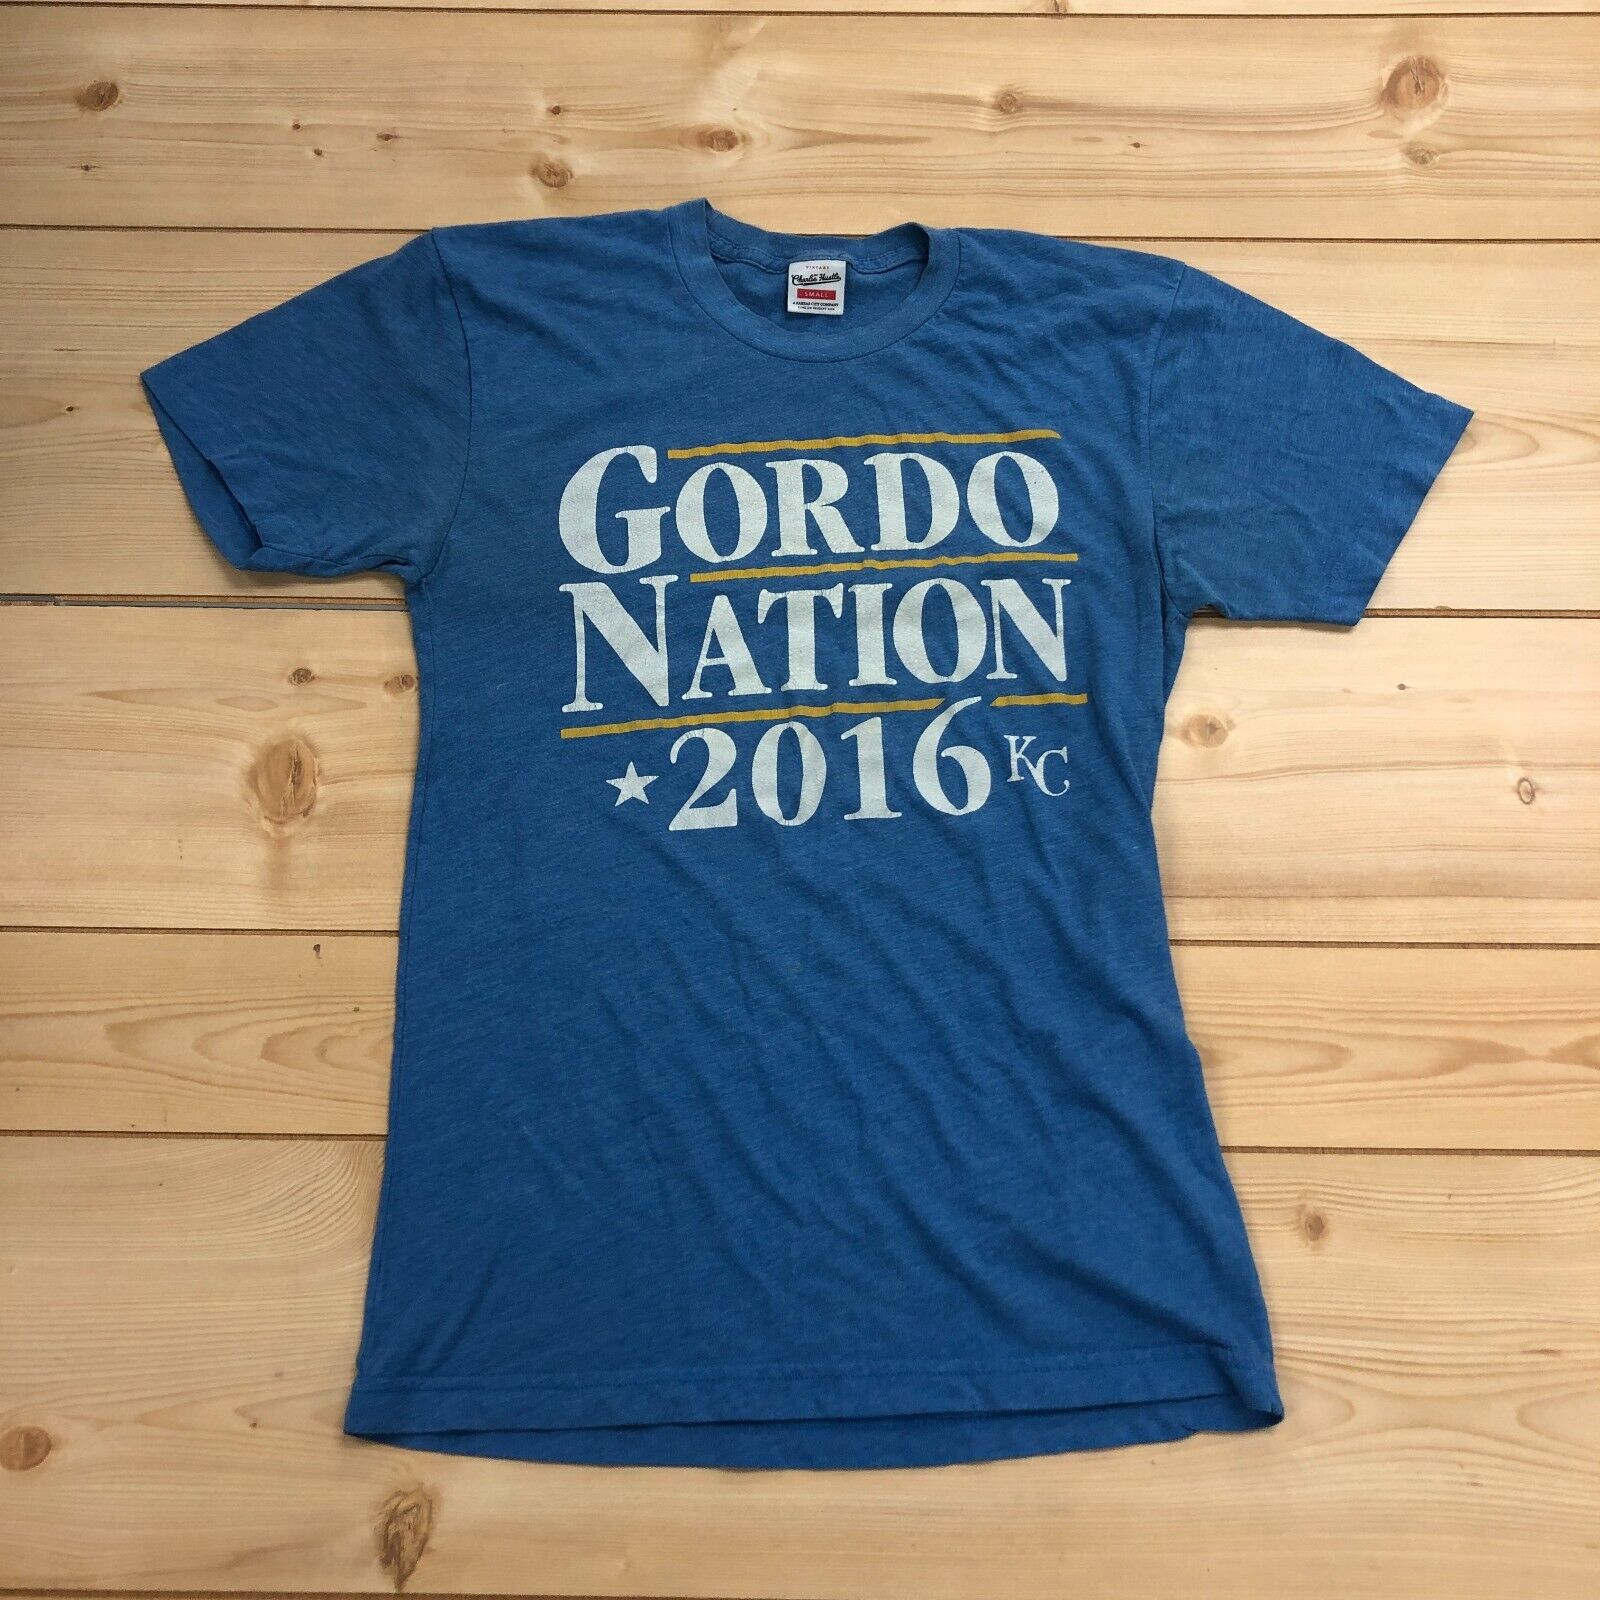 Charlie Hustle Blue Gordo Nation 2016 Graphic Short Sleeve Shirt Womens Size S